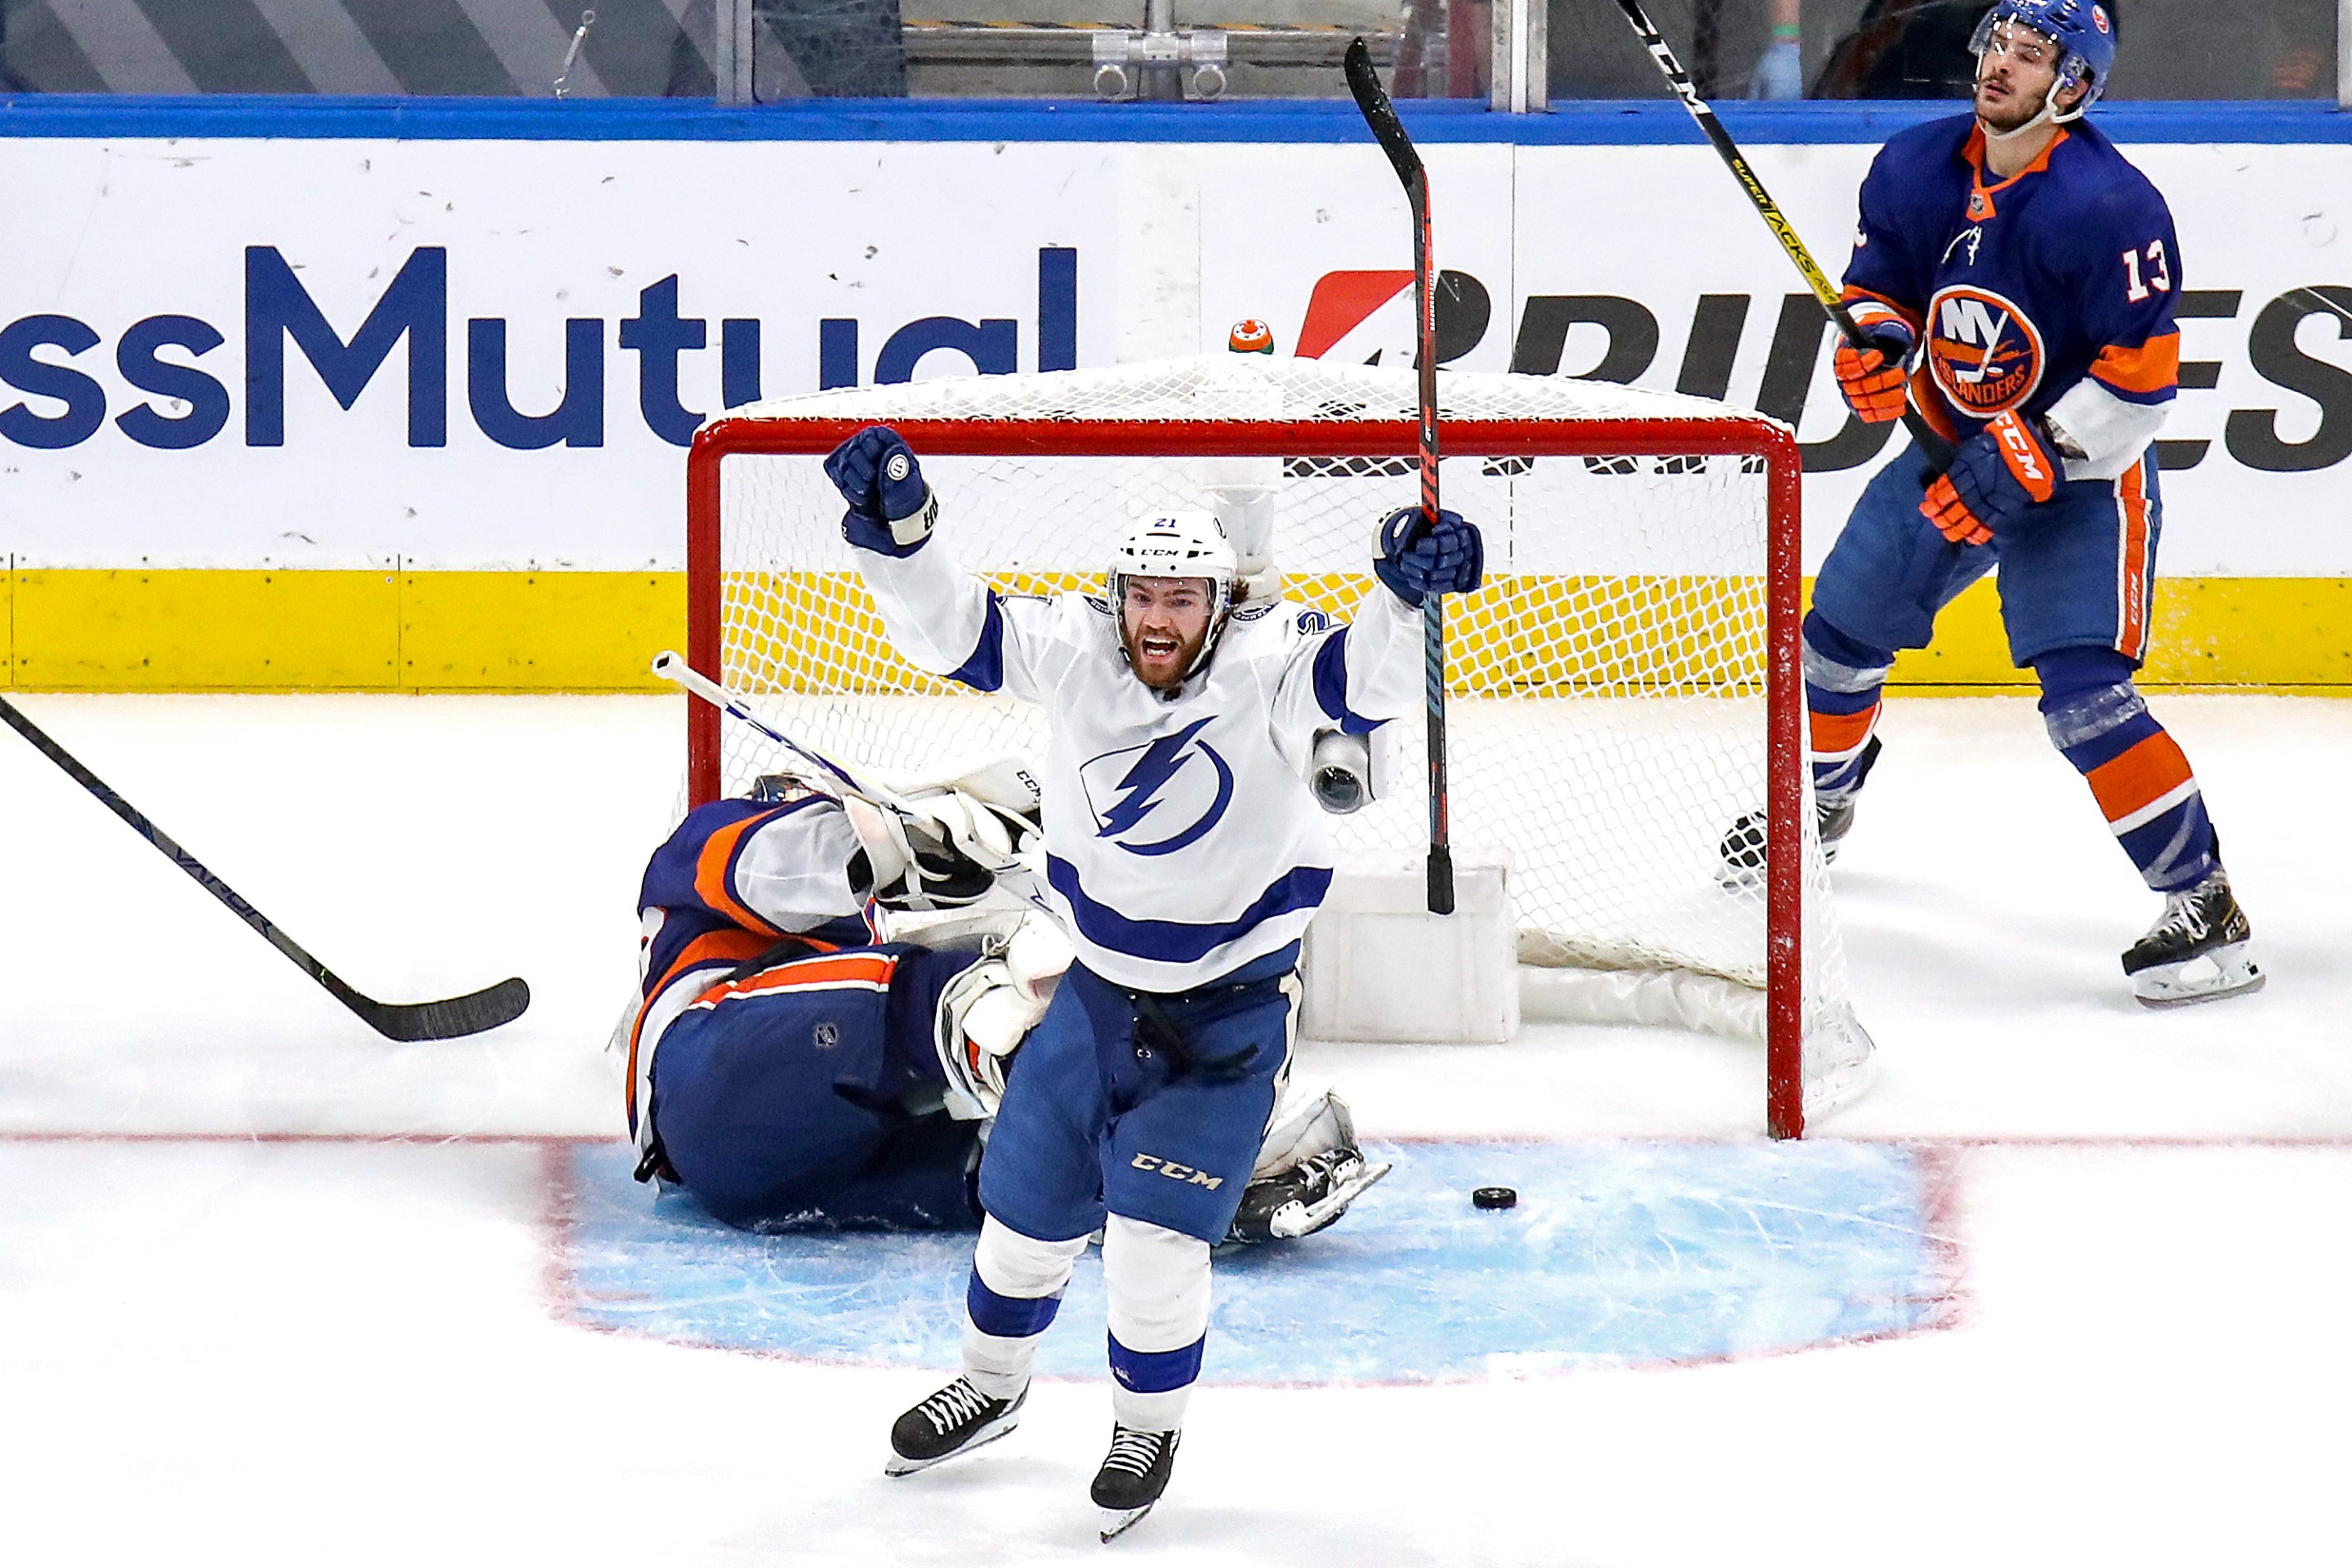 Brayden Point of the Tampa Bay Lightning celebrates after scoring a goal past Semyon Varlamov of the New York Islanders